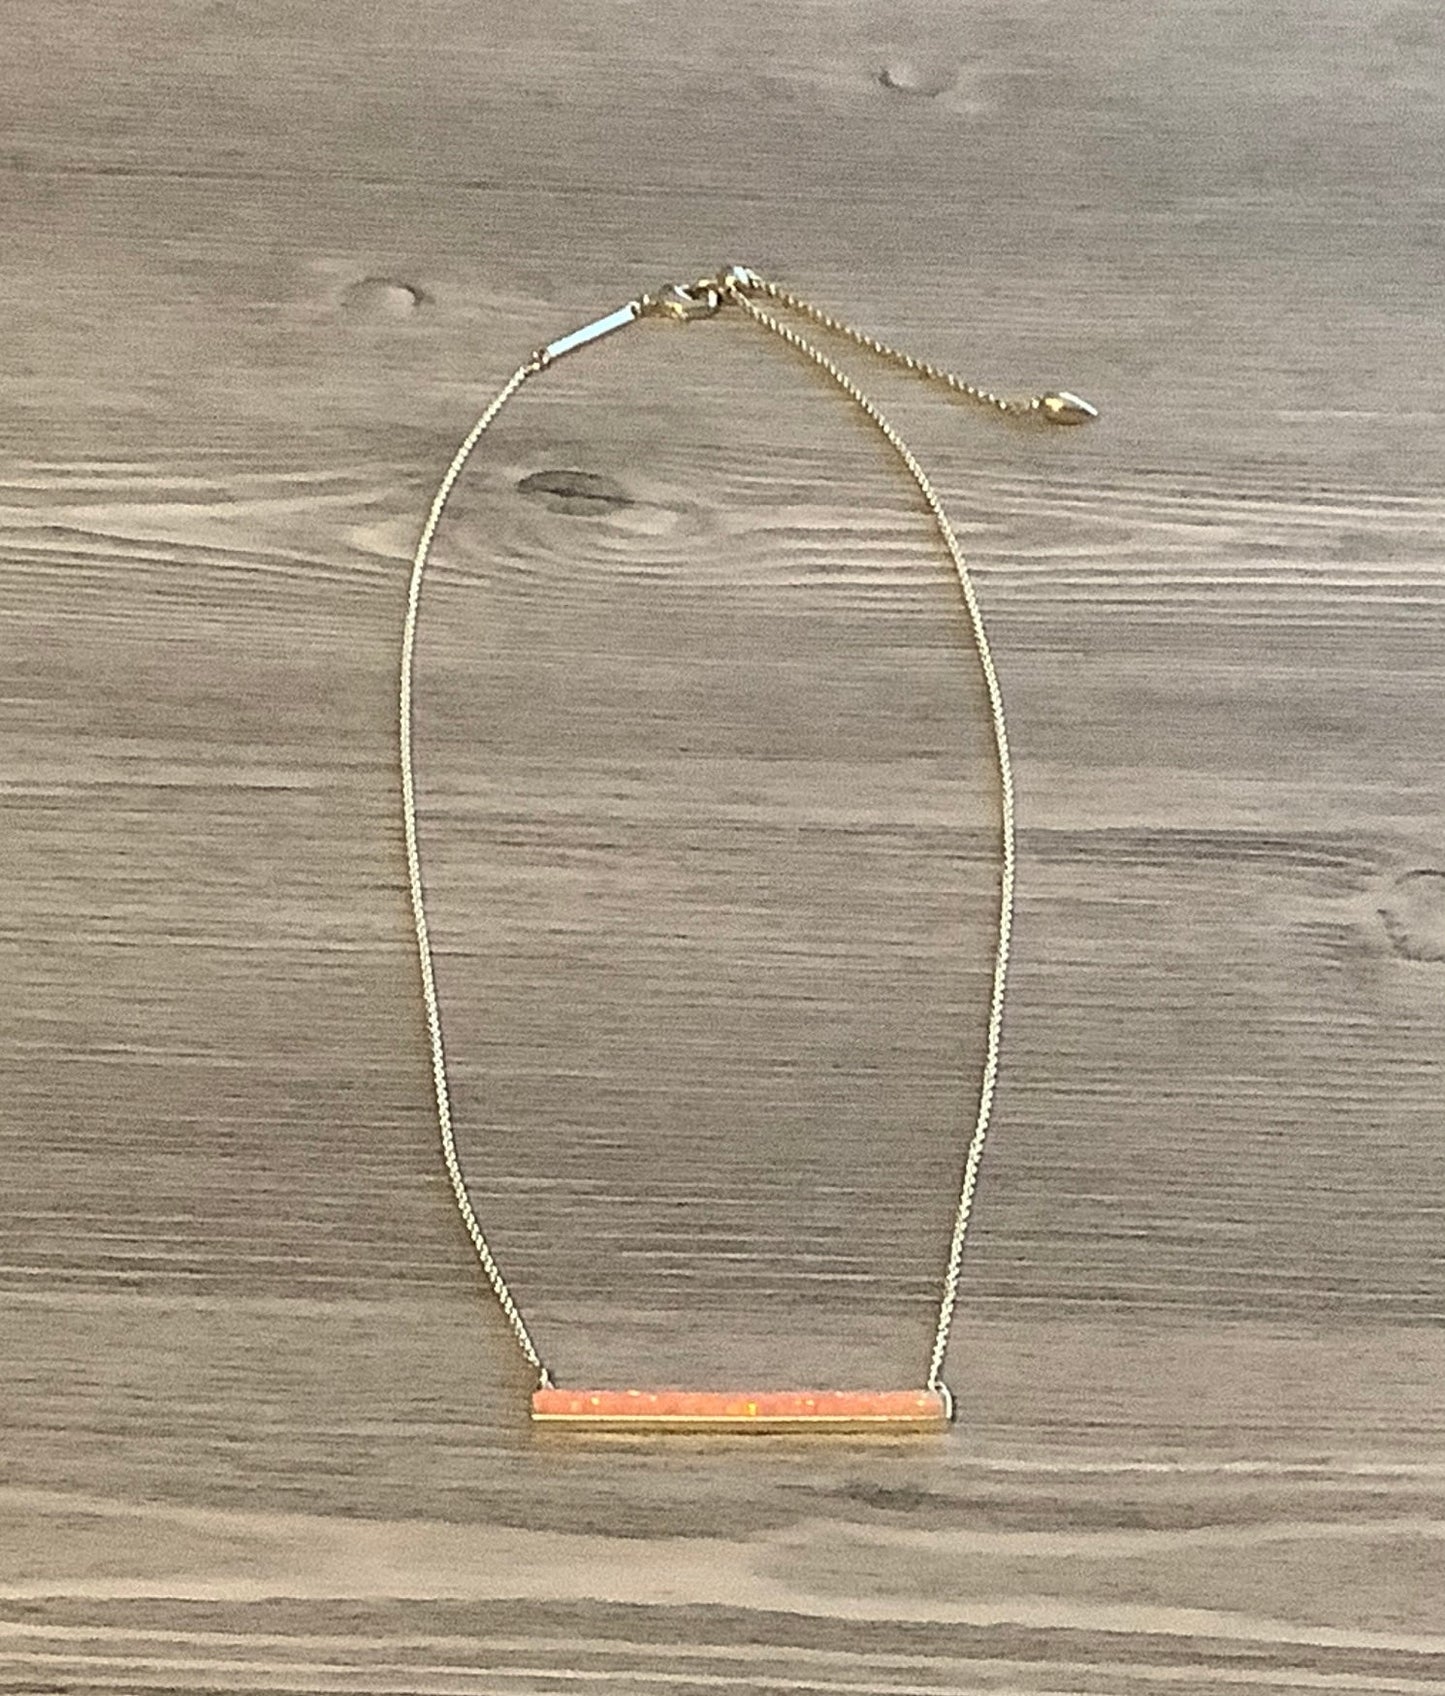 Necklace Chain Kendra Scott